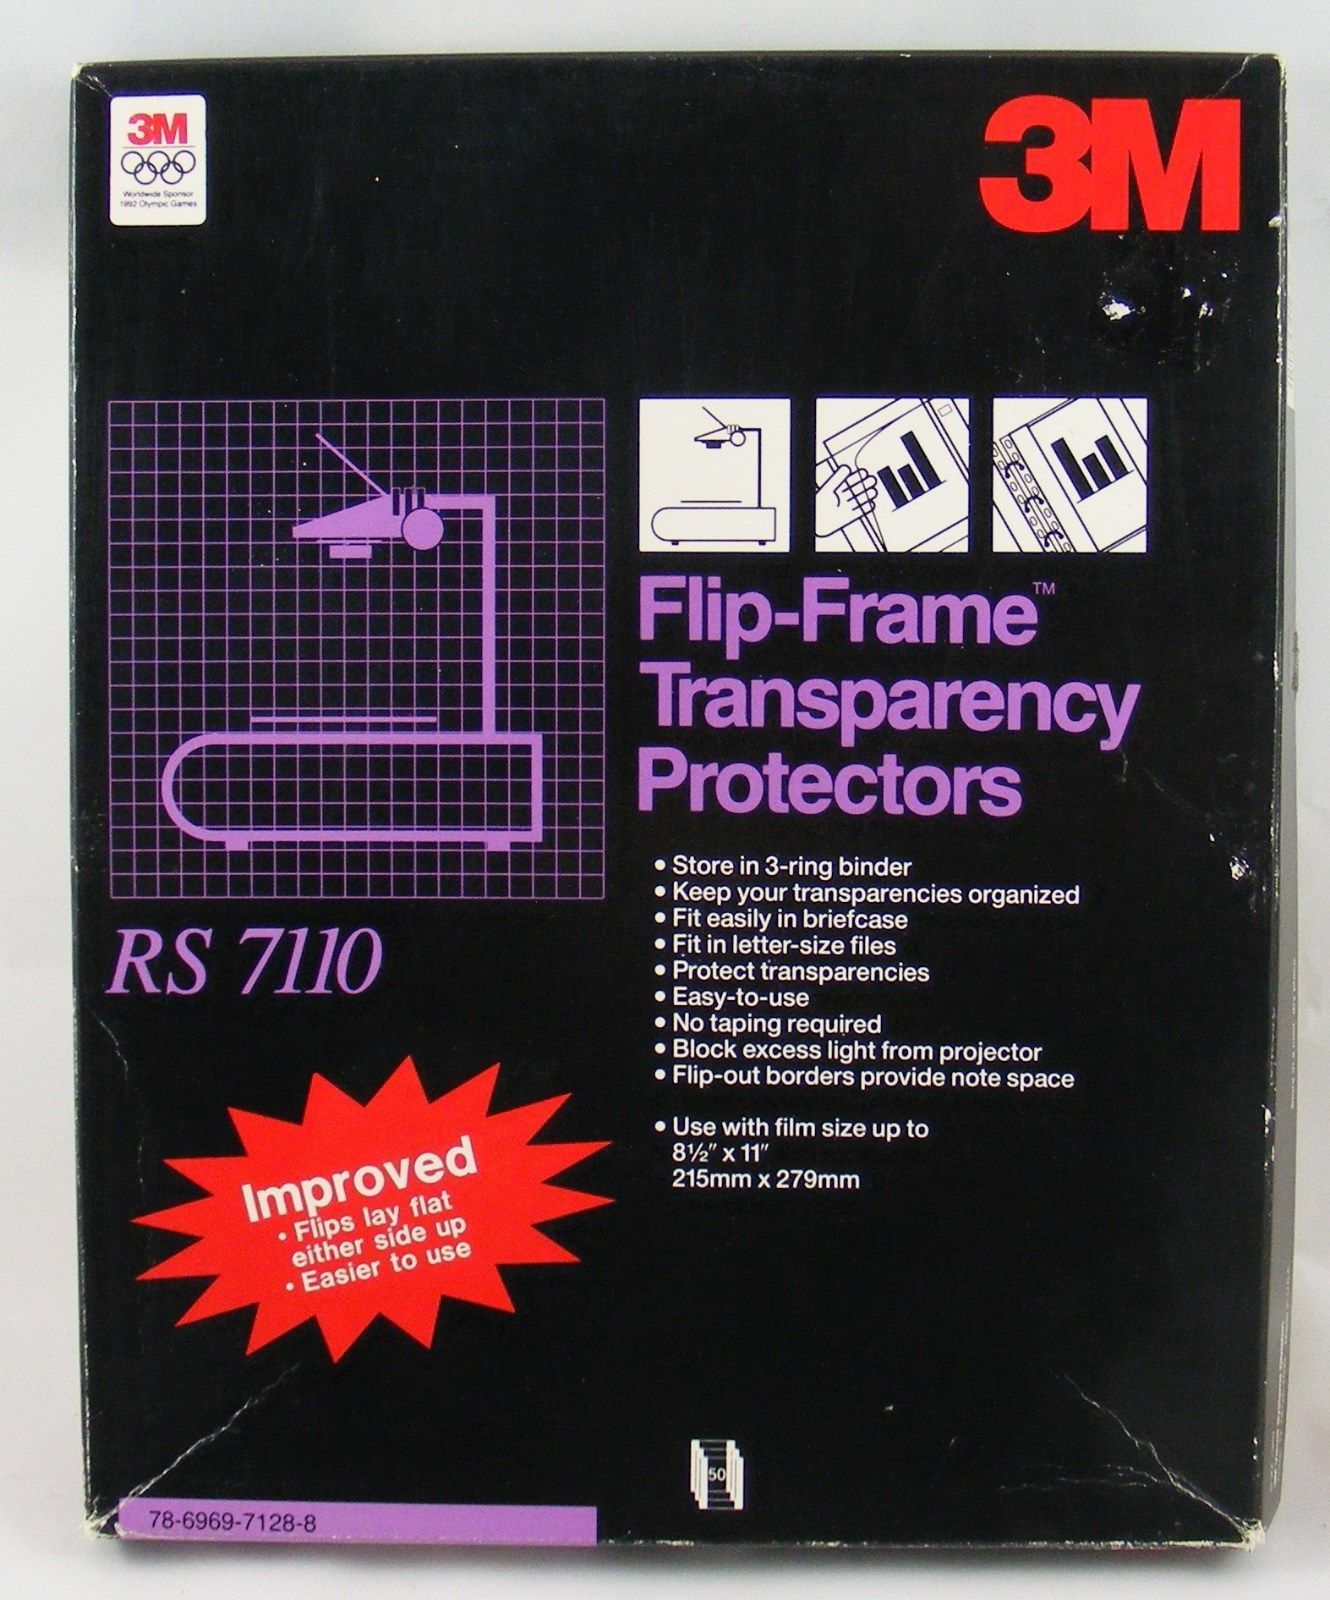 3M RS 7110 Flip Frame Transparency Protectors - $12.30